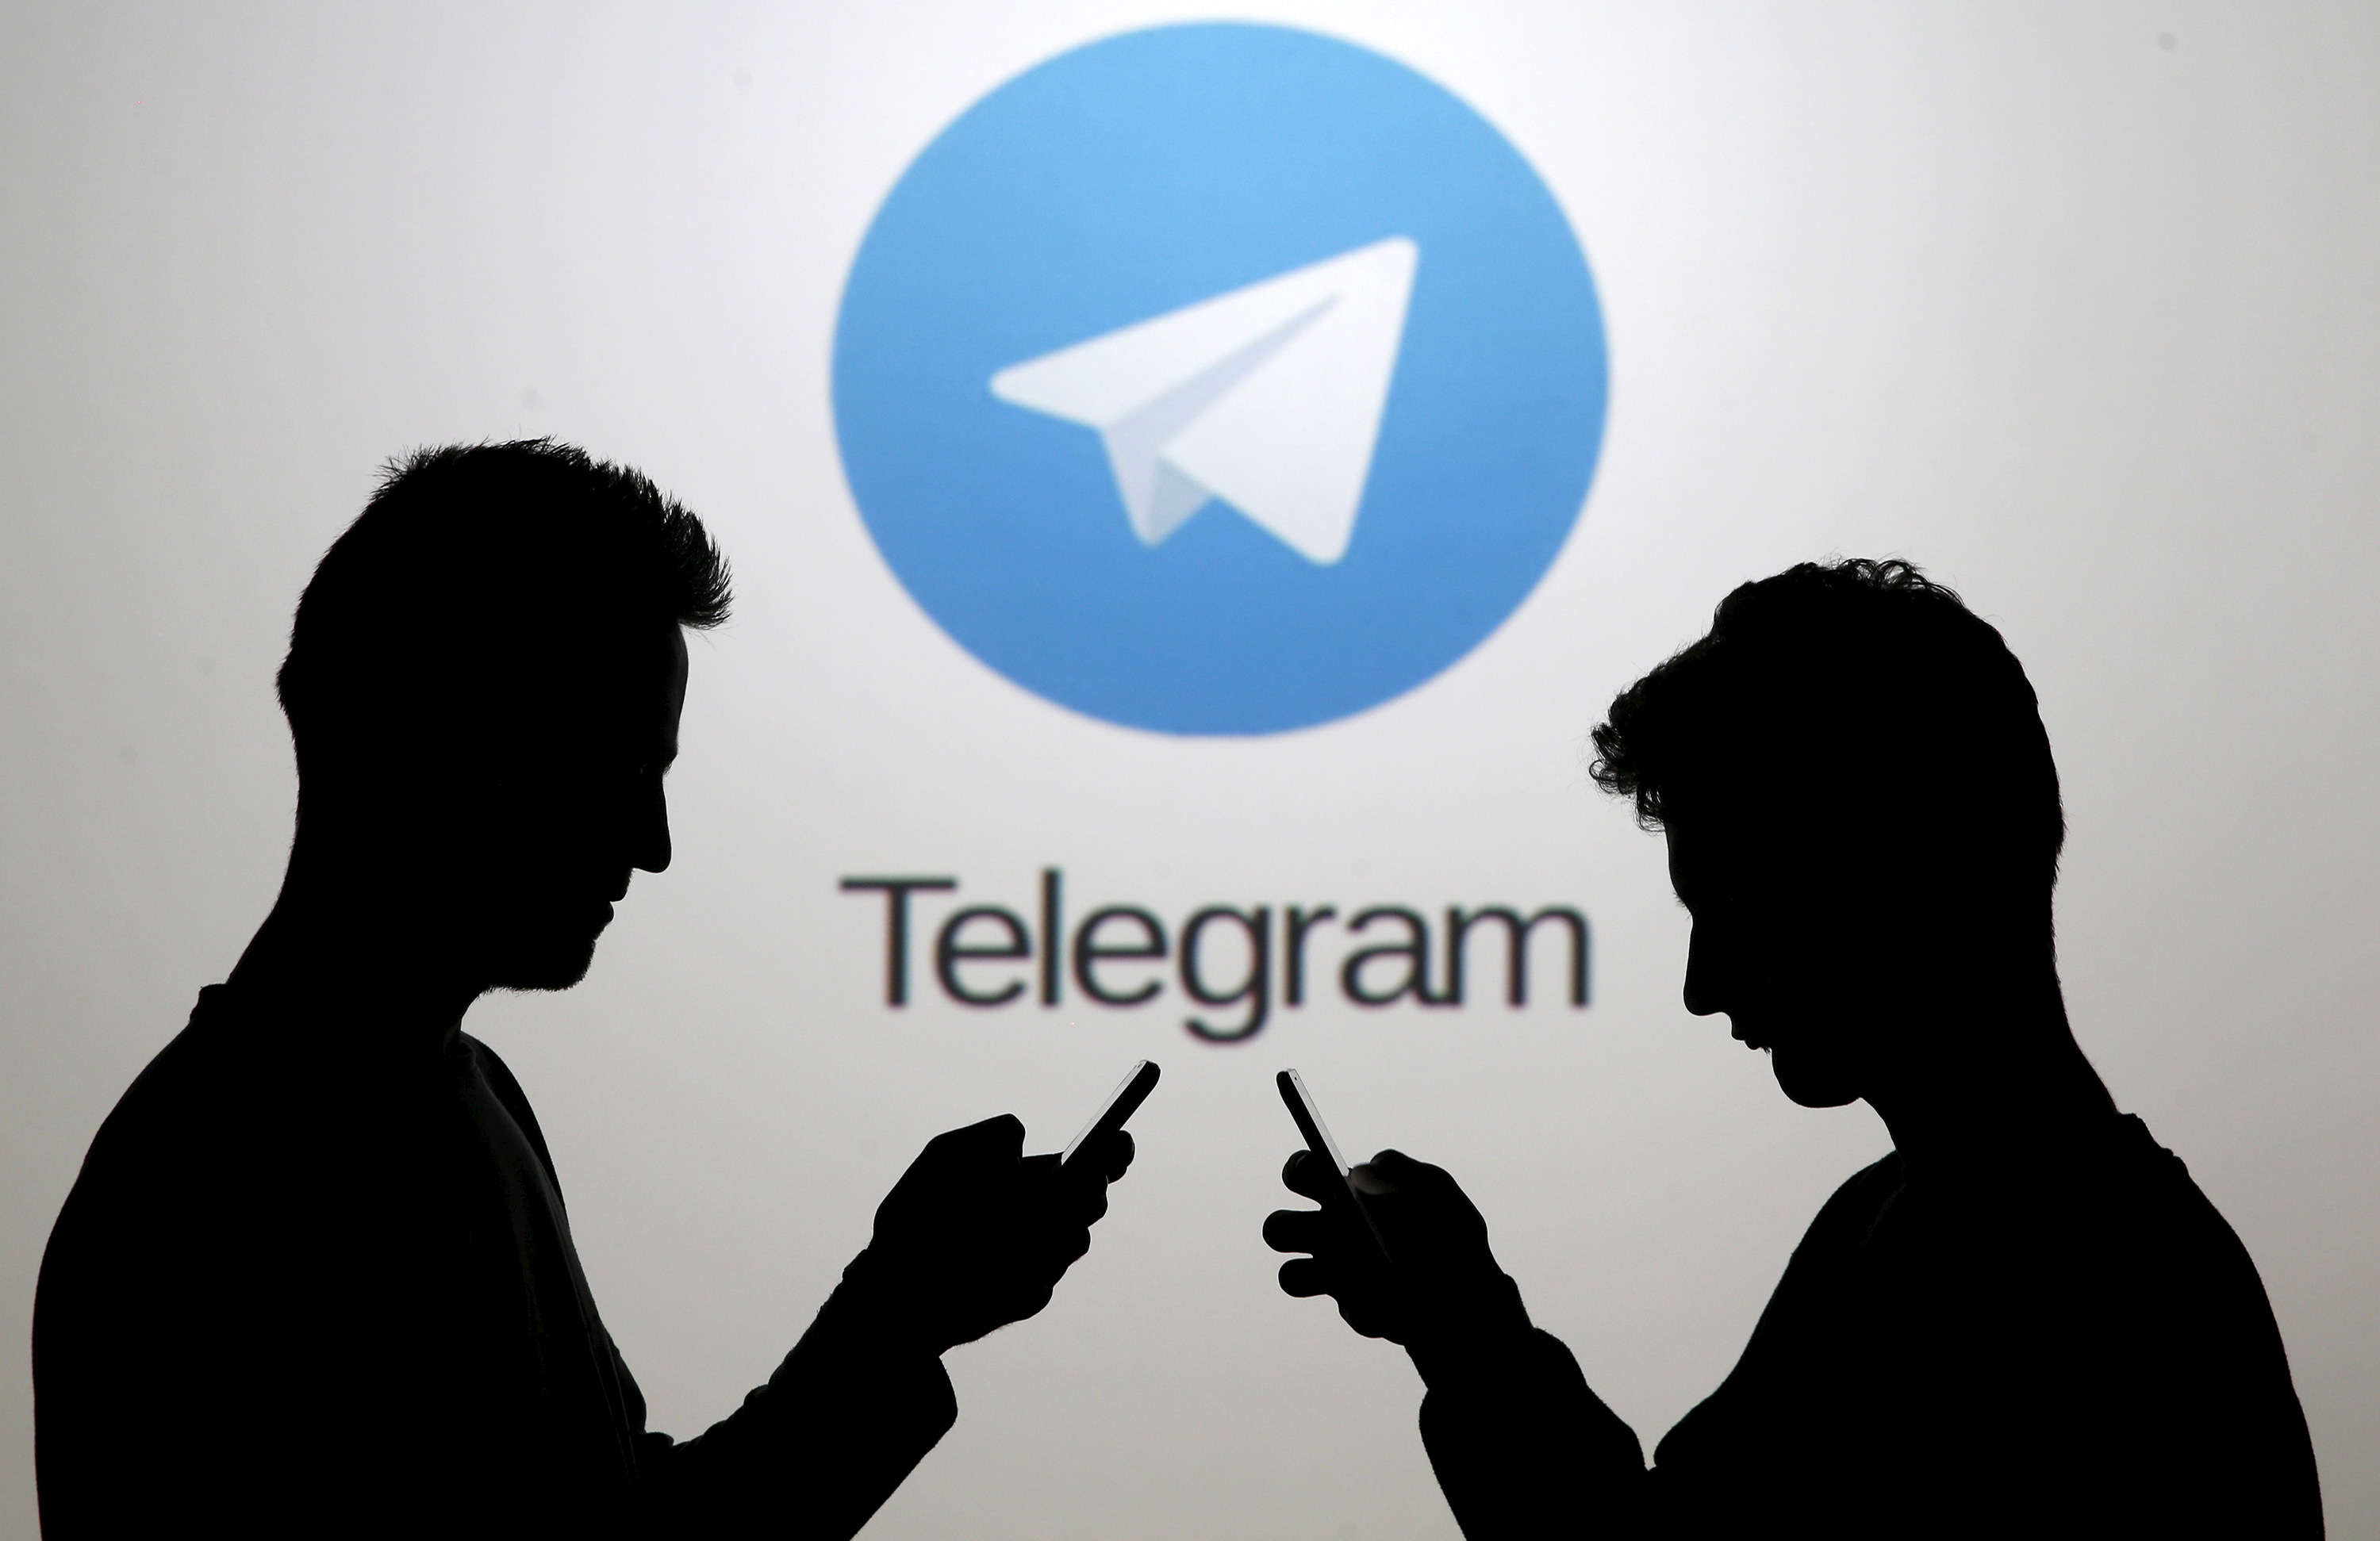   telegram     - 